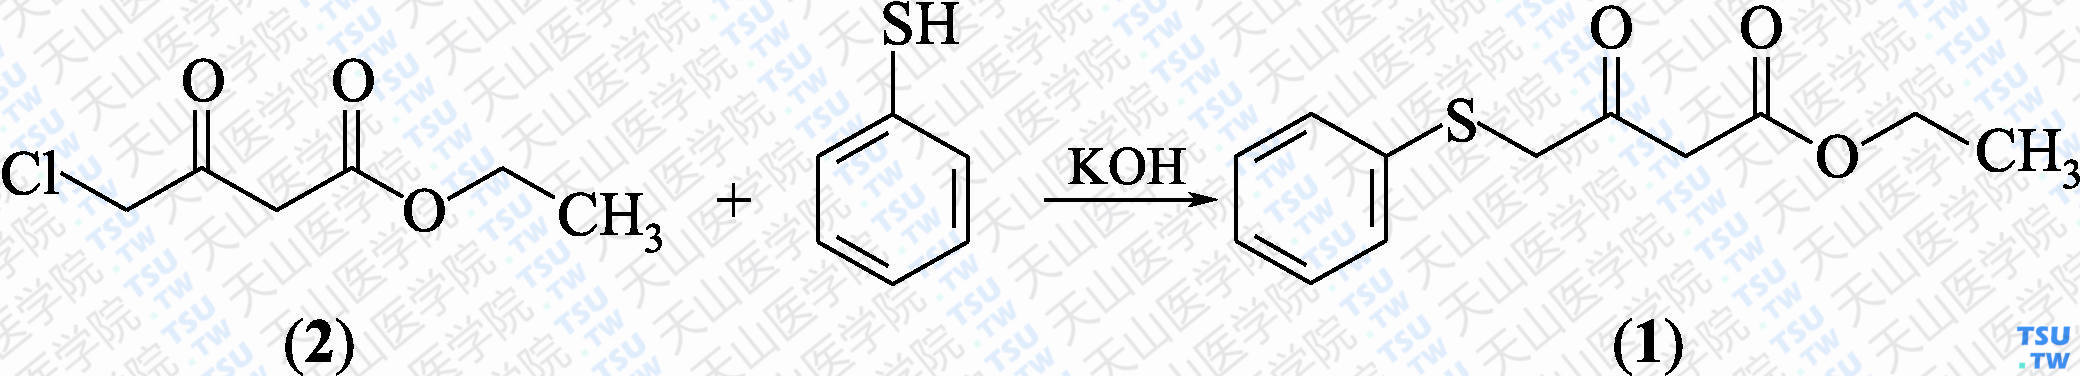 4-苯硫基乙酰乙酸乙酯（分子式：C<sub>12</sub>H<sub>14</sub>O<sub>3</sub>S）的合成方法路线及其结构式